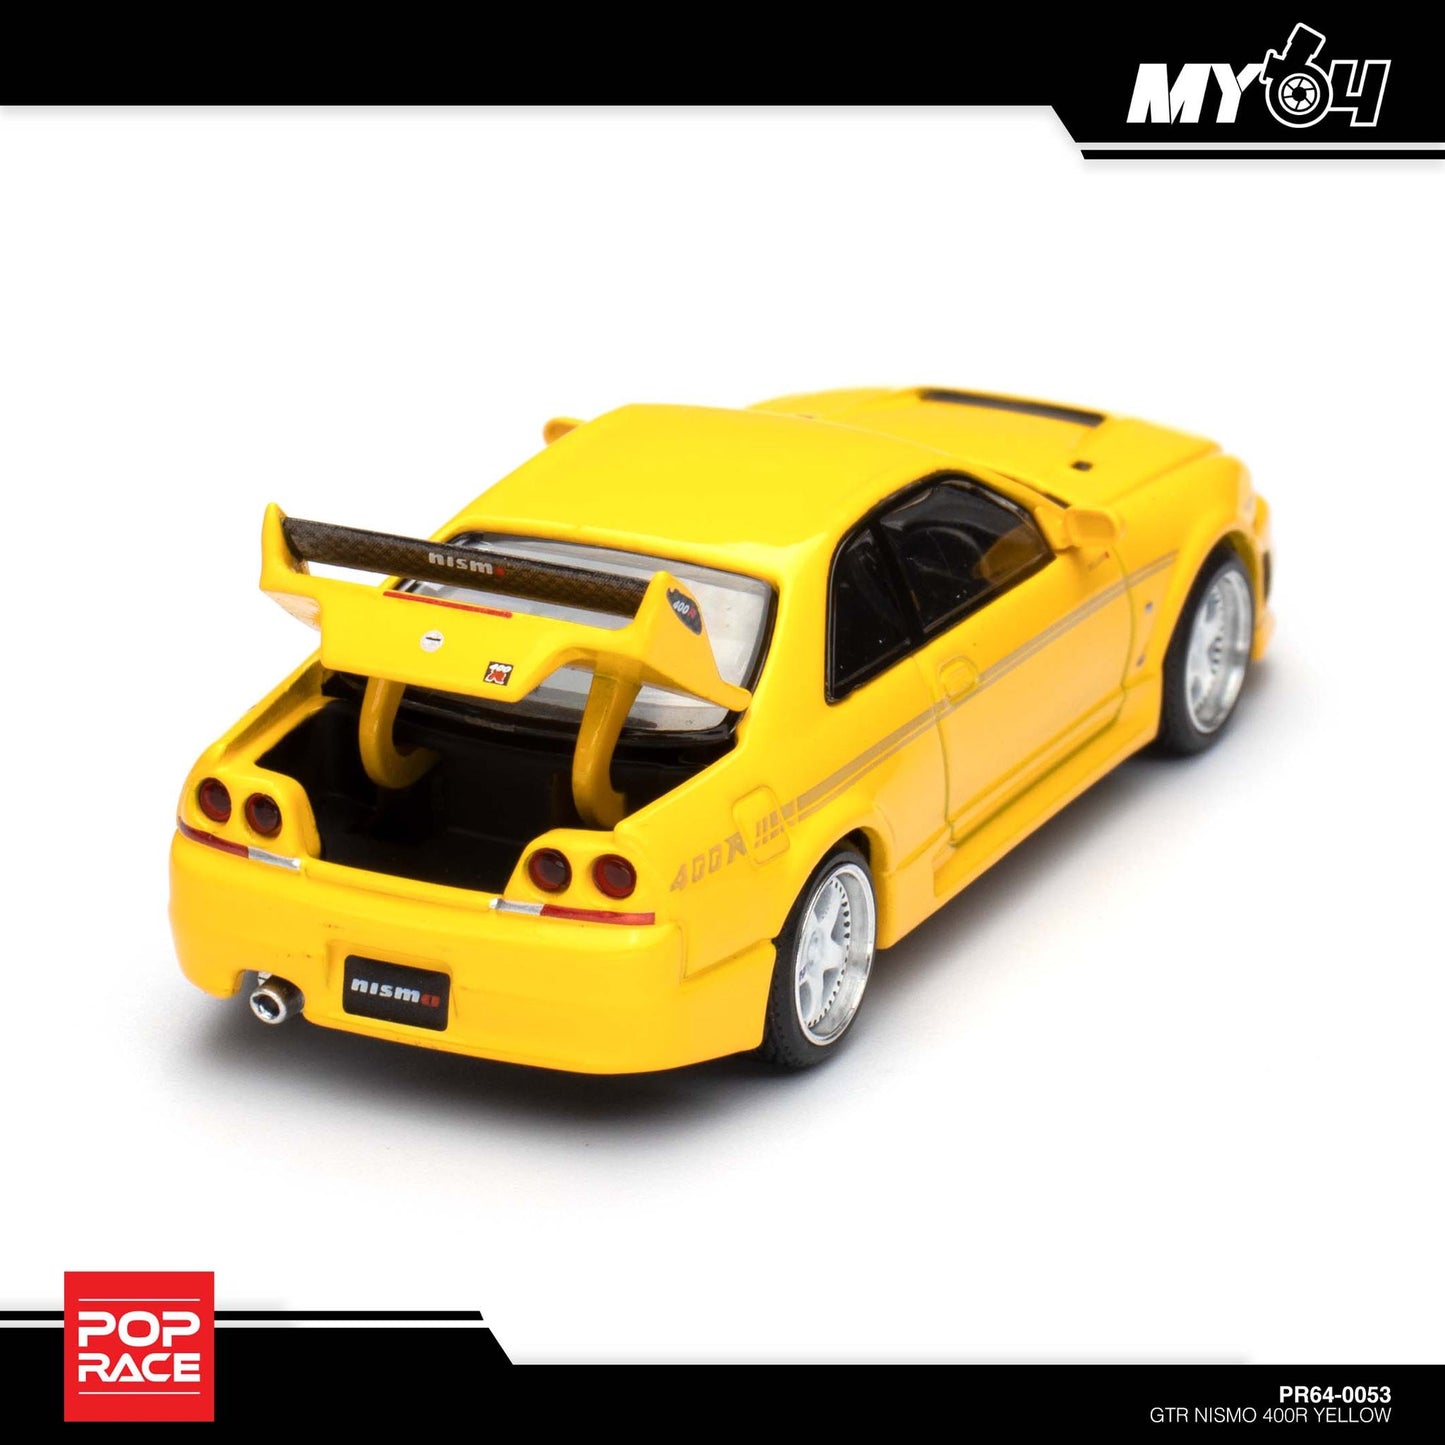 [Pop Race] Nissan GT-R Nismo 400R Prototype Yellow